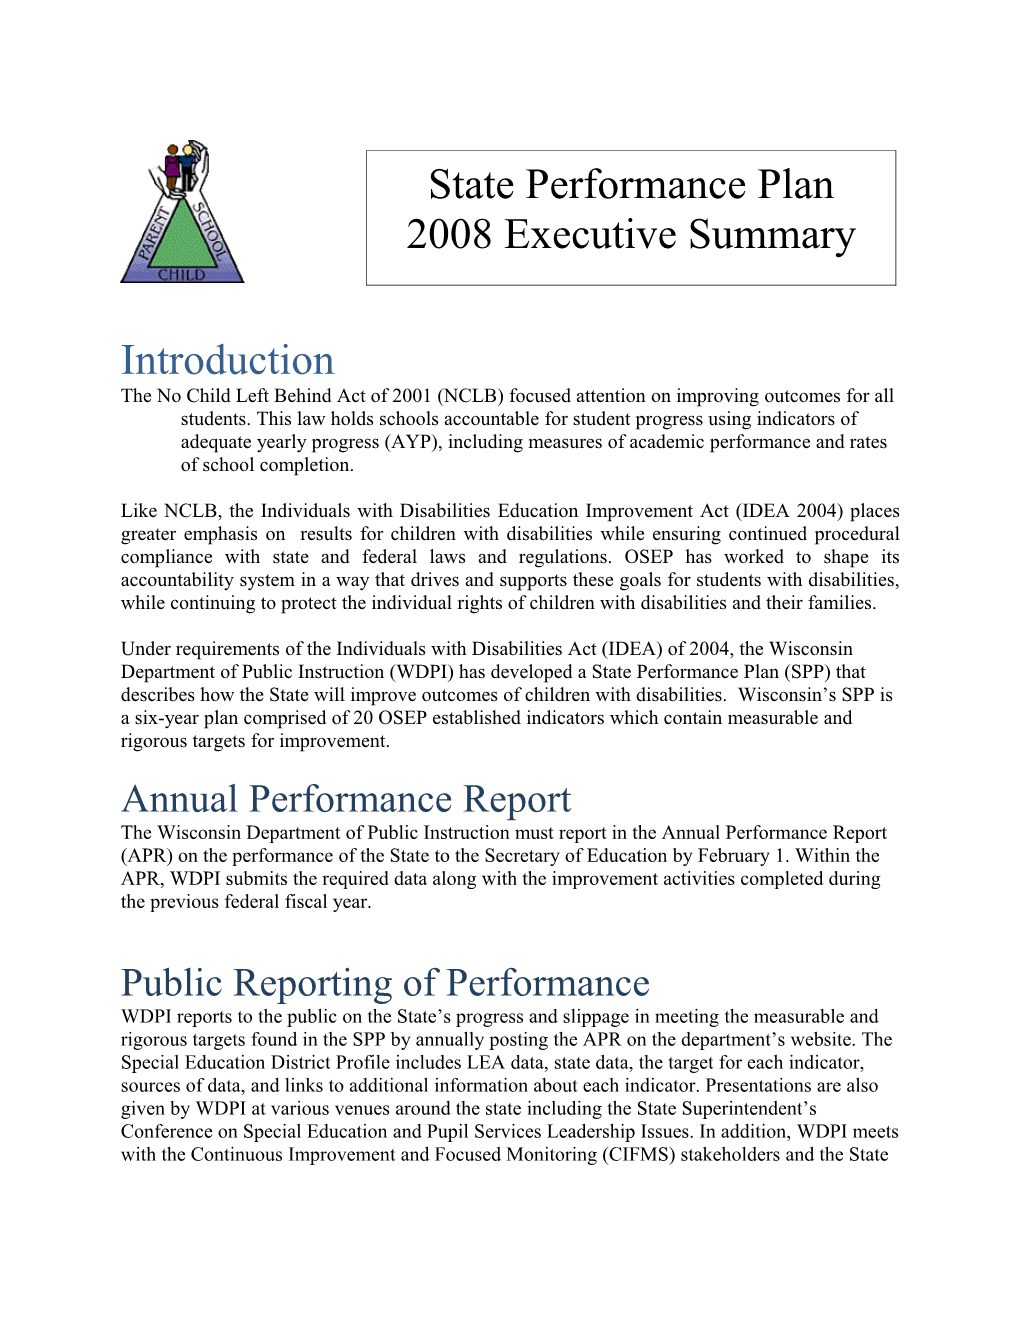 State Performance Plan 2008 Executive Summary